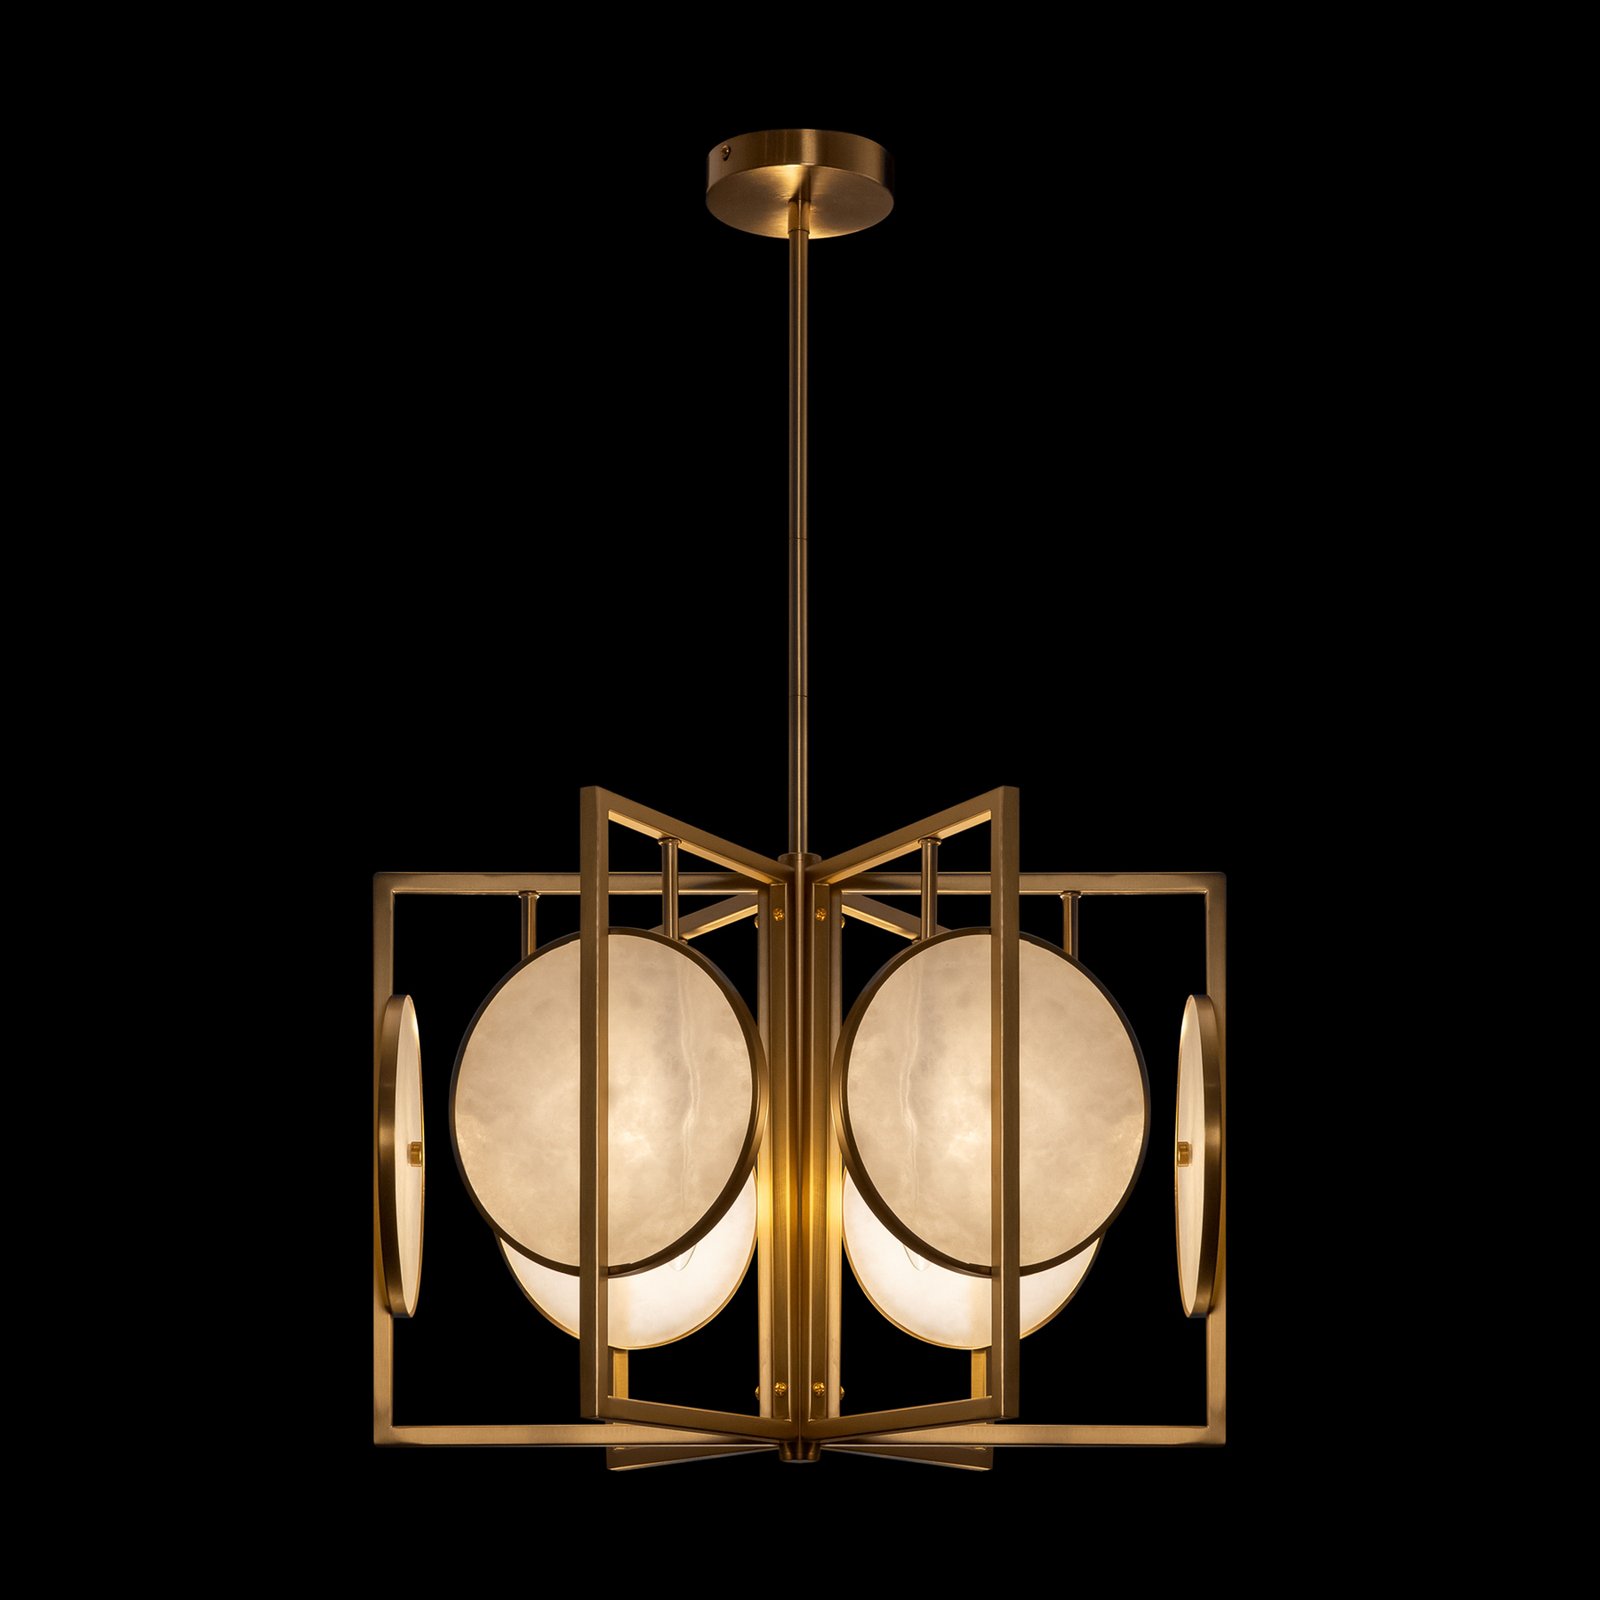 Maytoni Marmo hængelampe i guld, 6 lyskilder